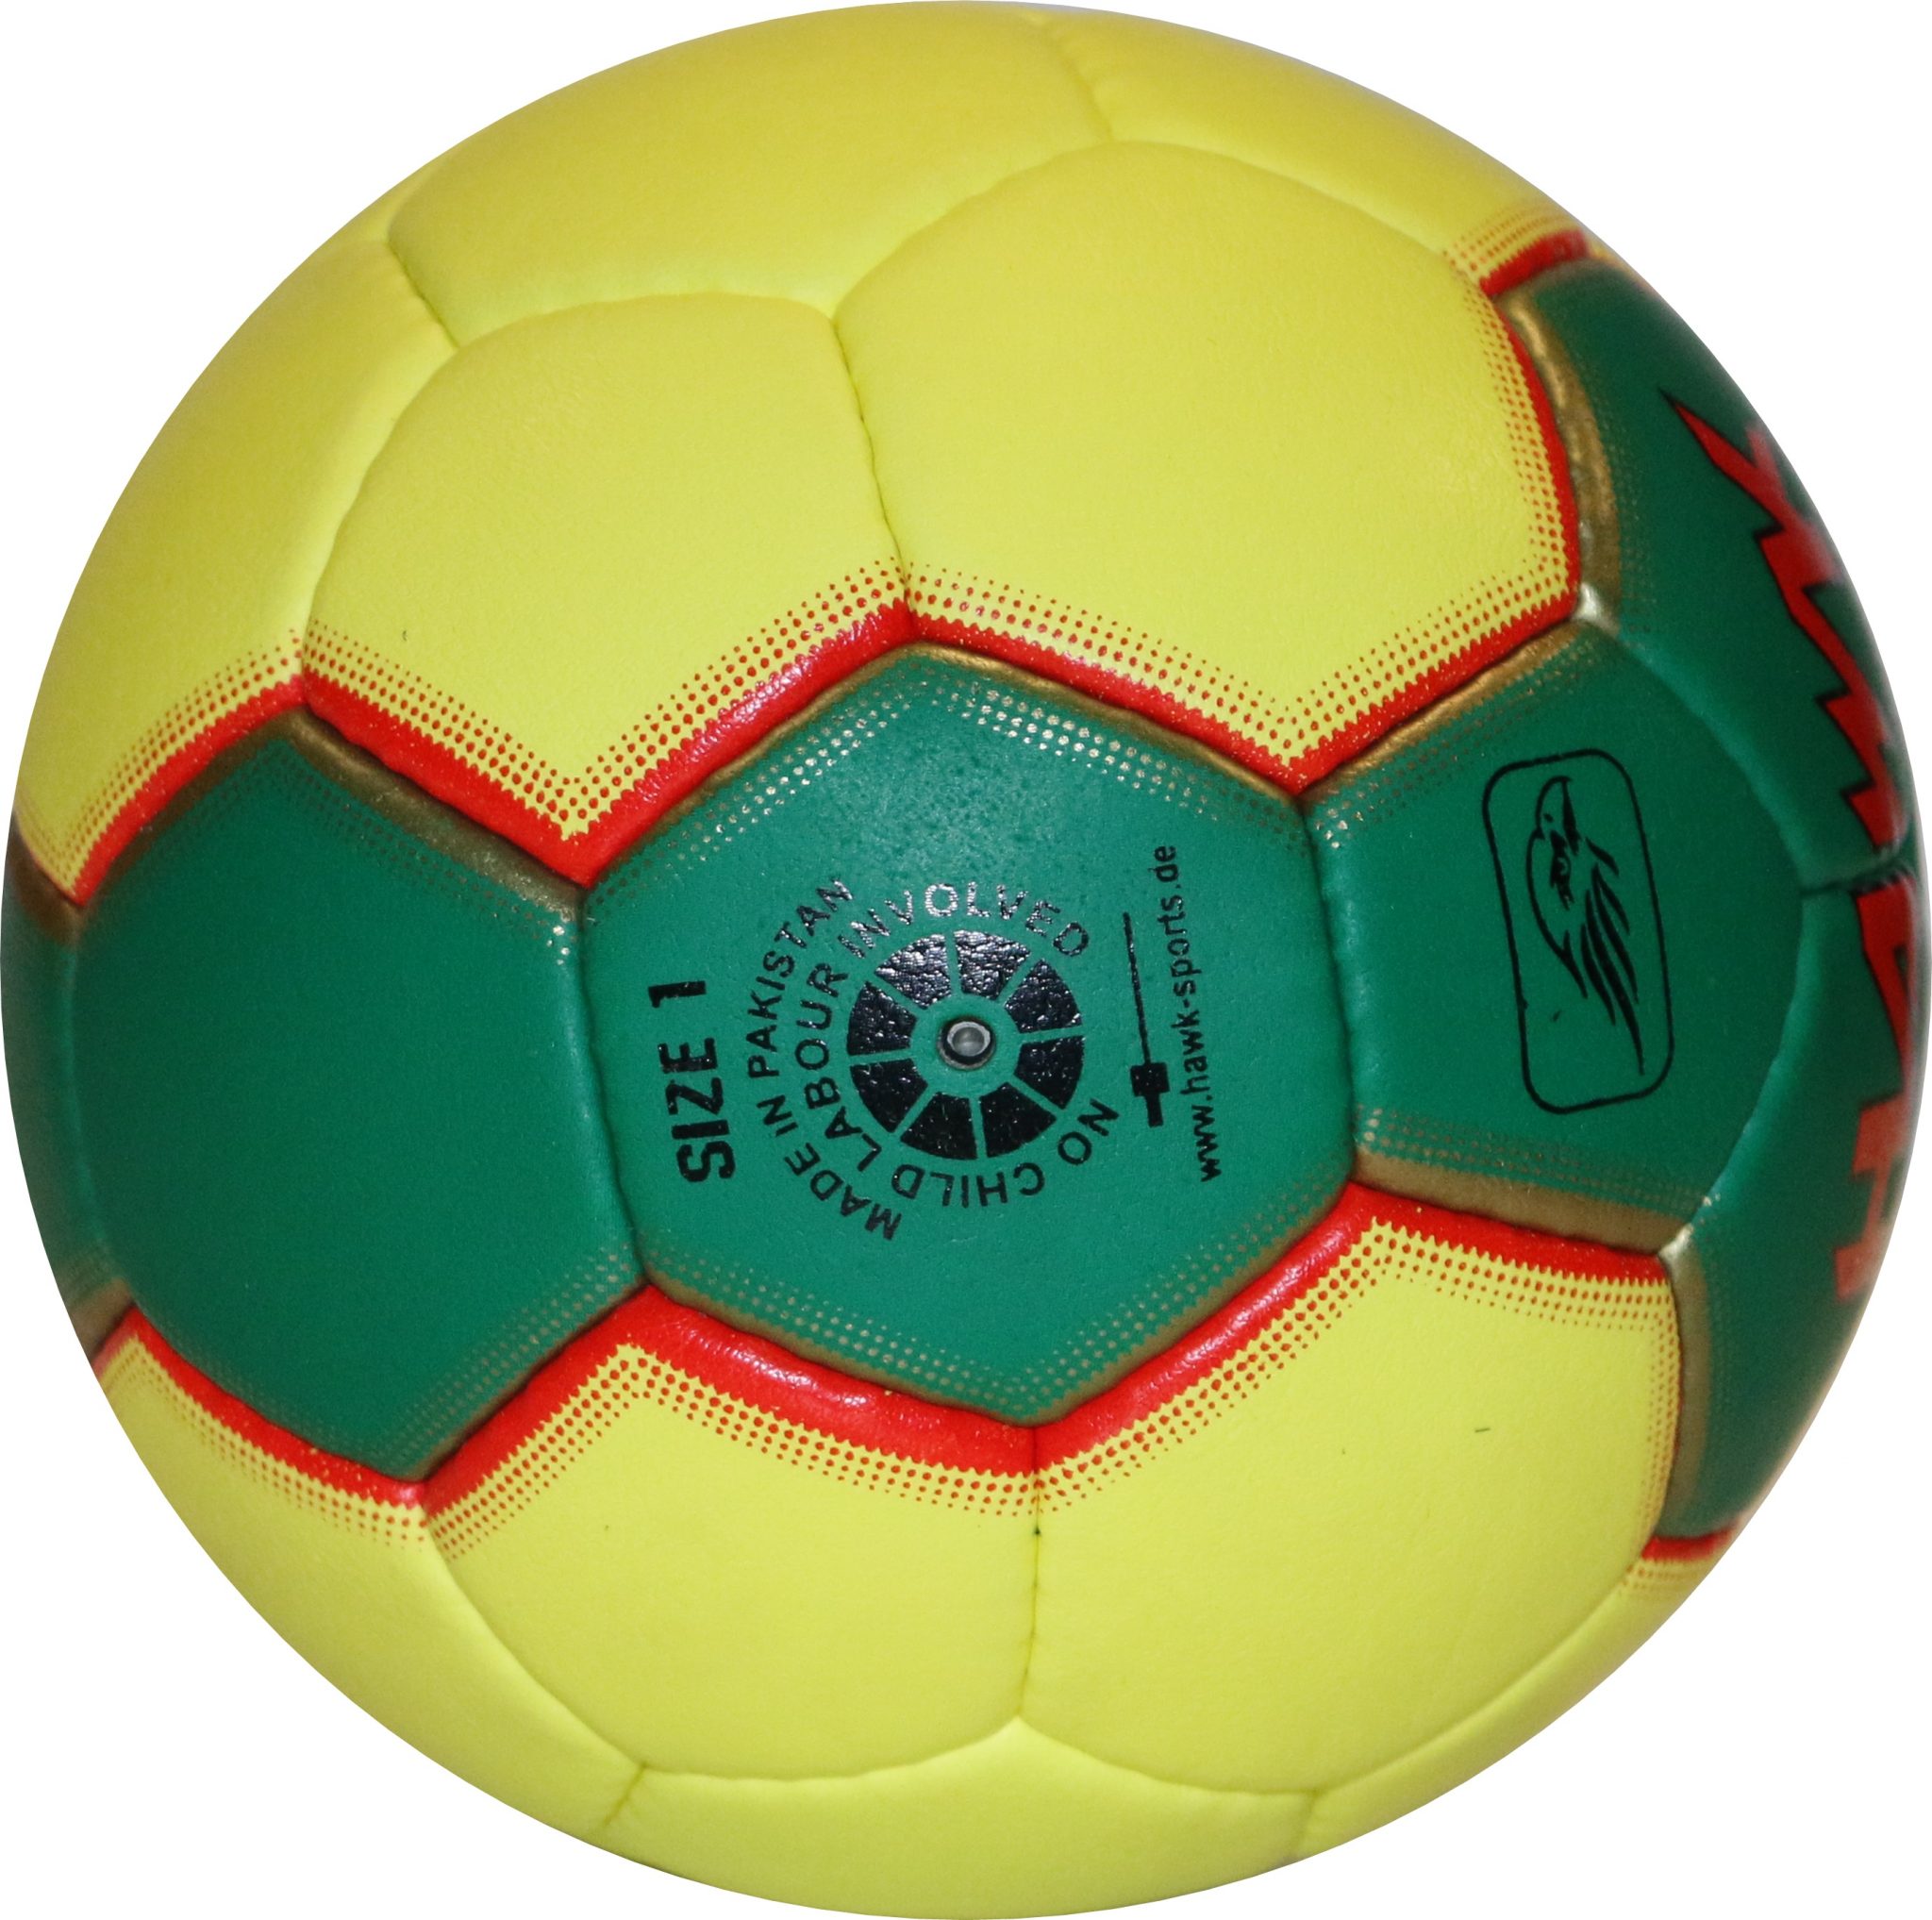 Field Soft Matchball Größe 1 Marke Hawk ® Handballball 